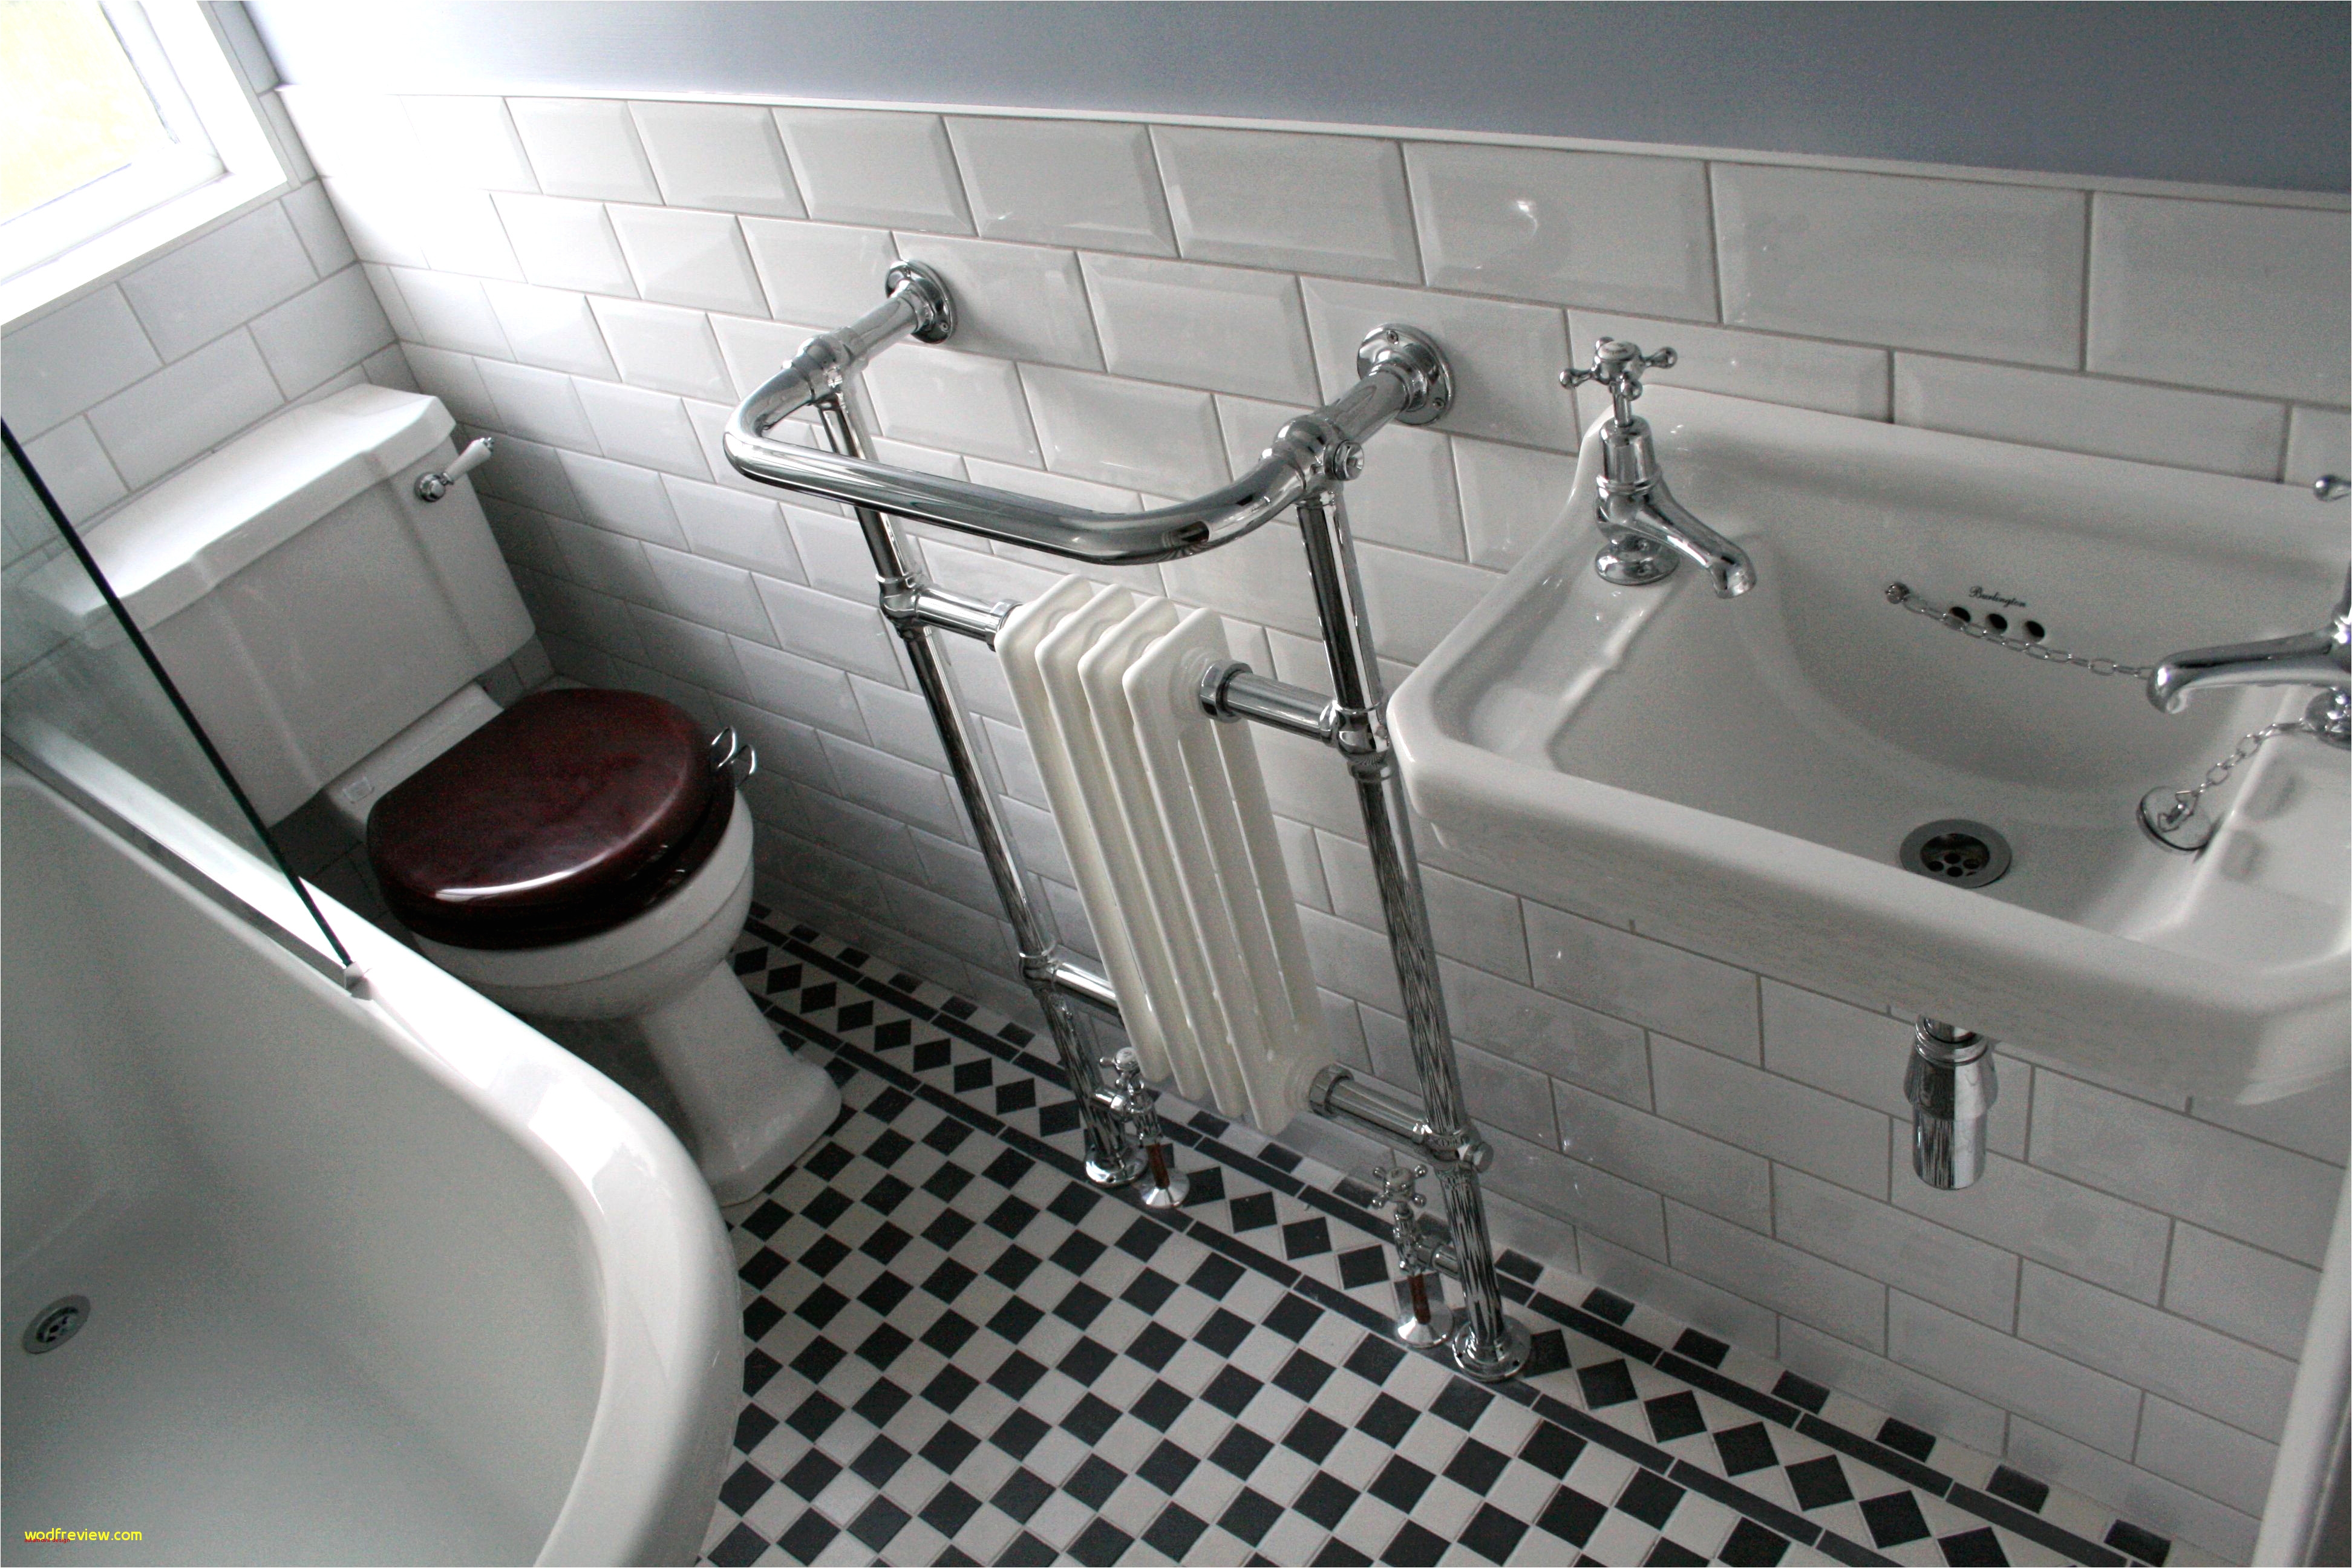 Reno Ideas For Small Bathrooms Small Bathroom Design Ideas Luxury Bathroom Designer 0d Tag 50 New 50 Awesome Glass Tile